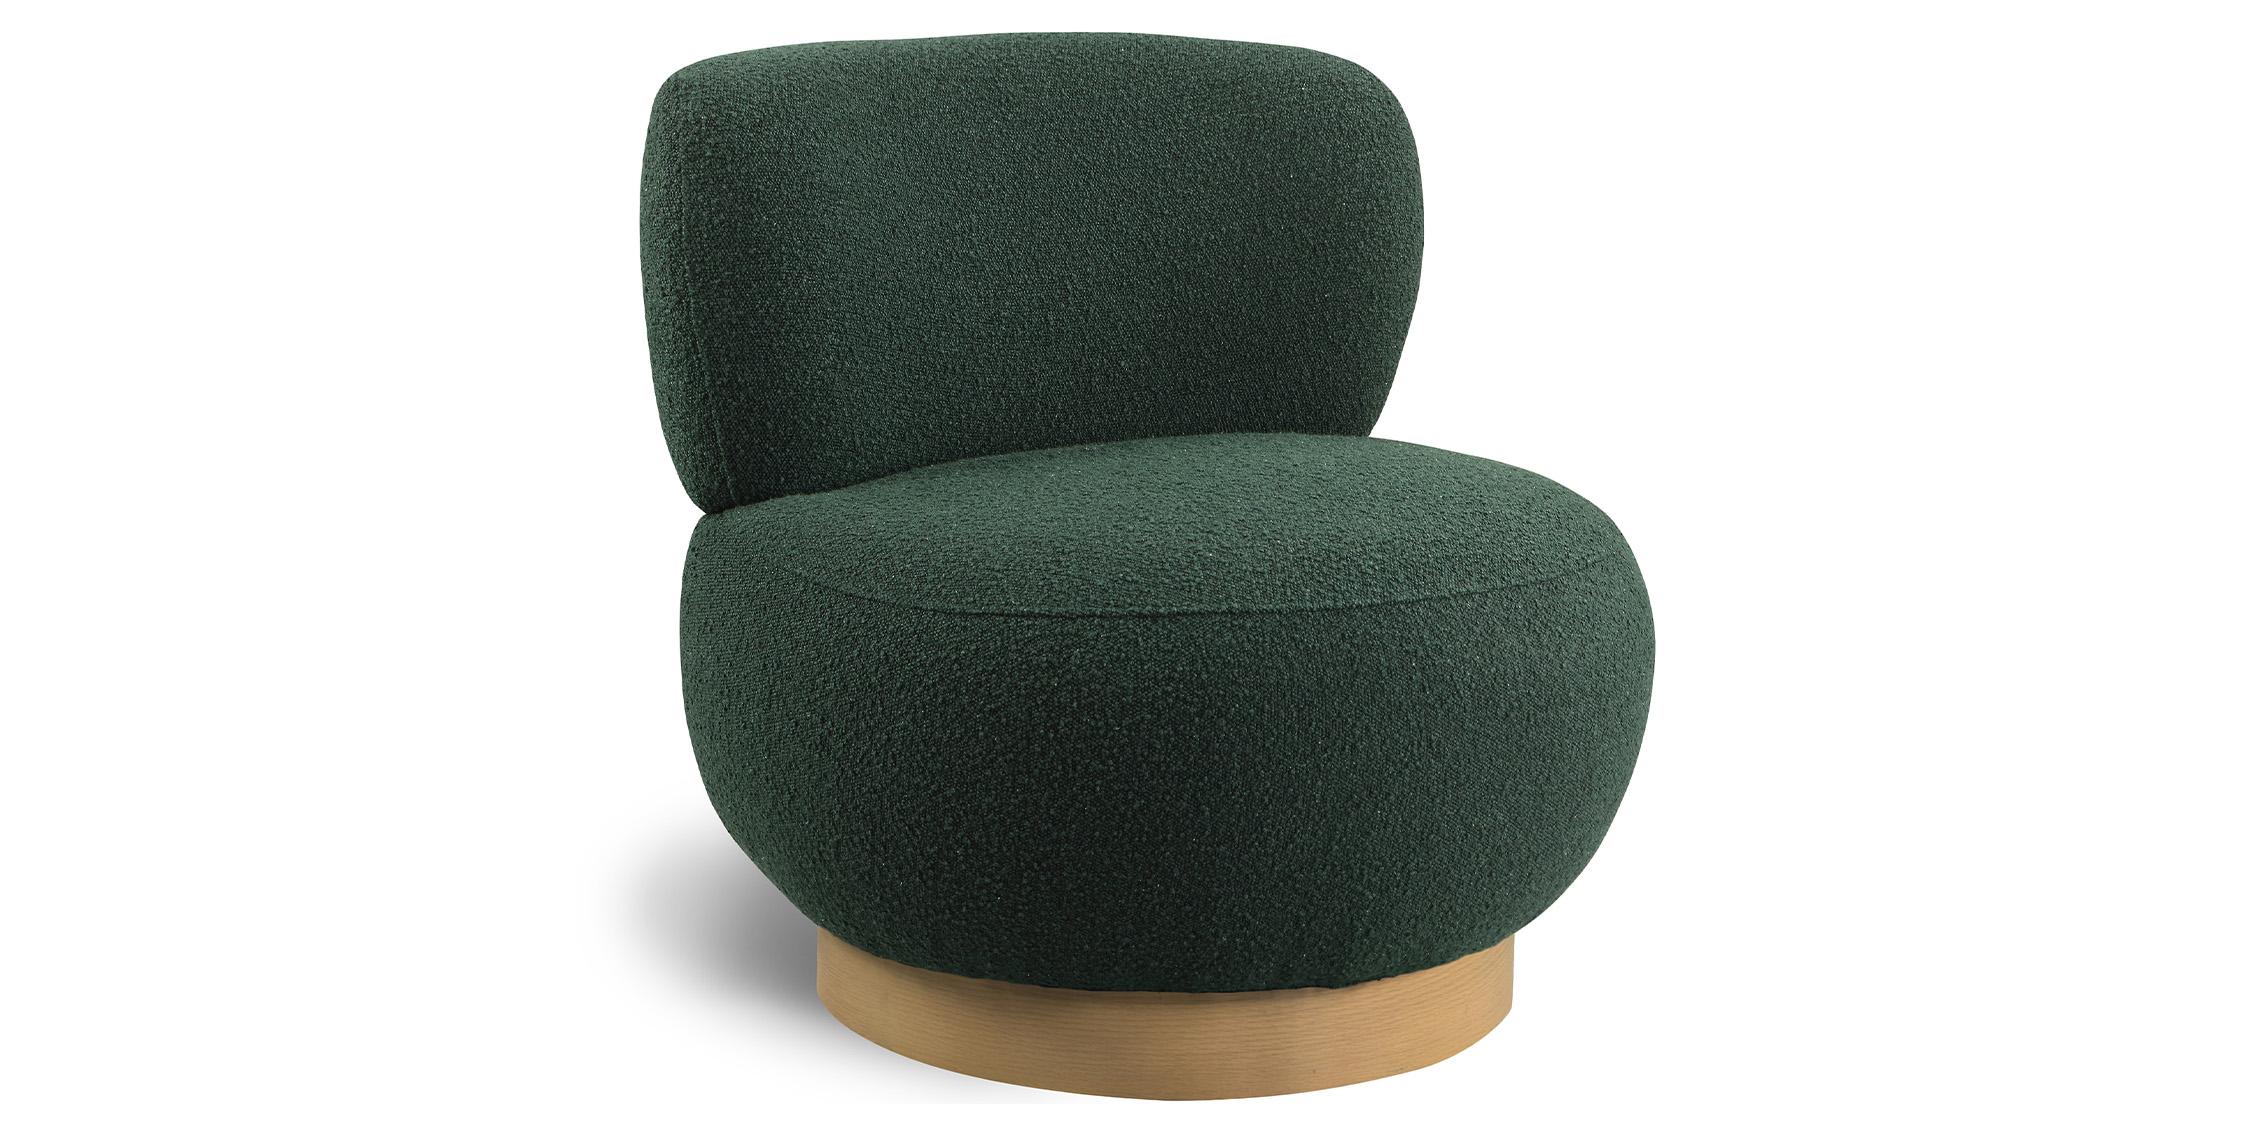 Contemporary, Modern Accent Chair CALAIS 556Green 556Green in Green 